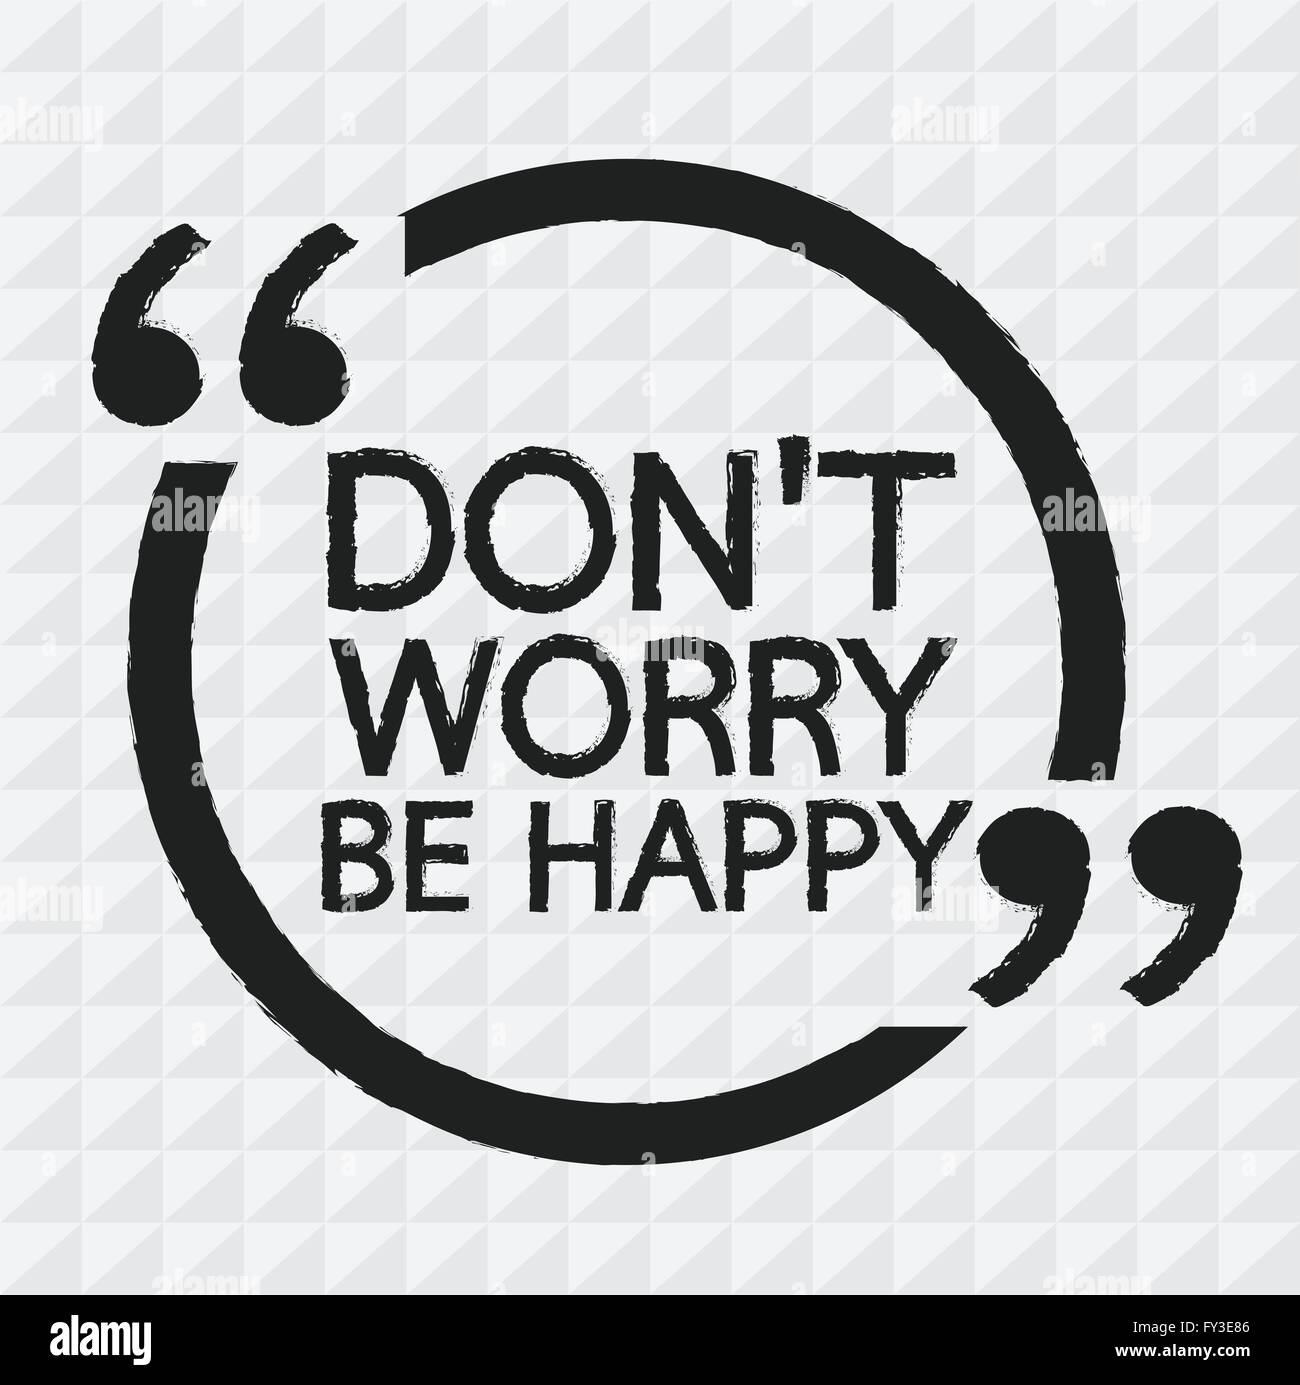 Bi happy. Надпись don't worry be Happy. Don't worry be Happy леттеринг. Dont worry by Happy исполнитель. Dont worry by Happy надпись.